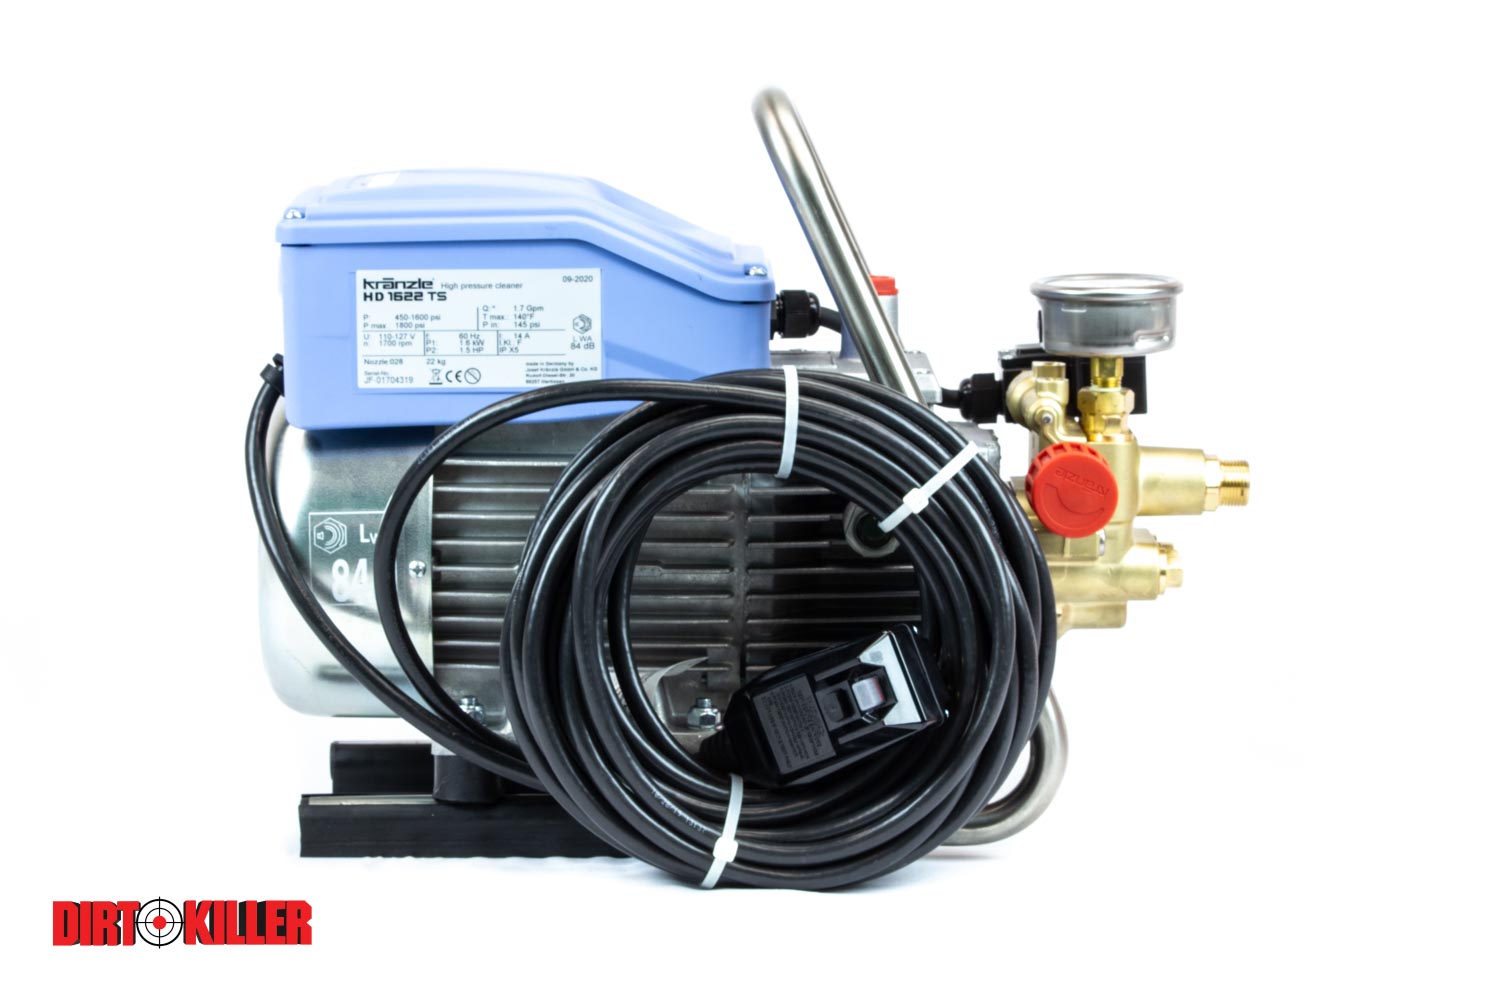 Kränzle K1622TS 1600 PSI 1.7 GPM Electric Pressure Washer-image_3.7 GPM Electric Pressure Washer-image_3